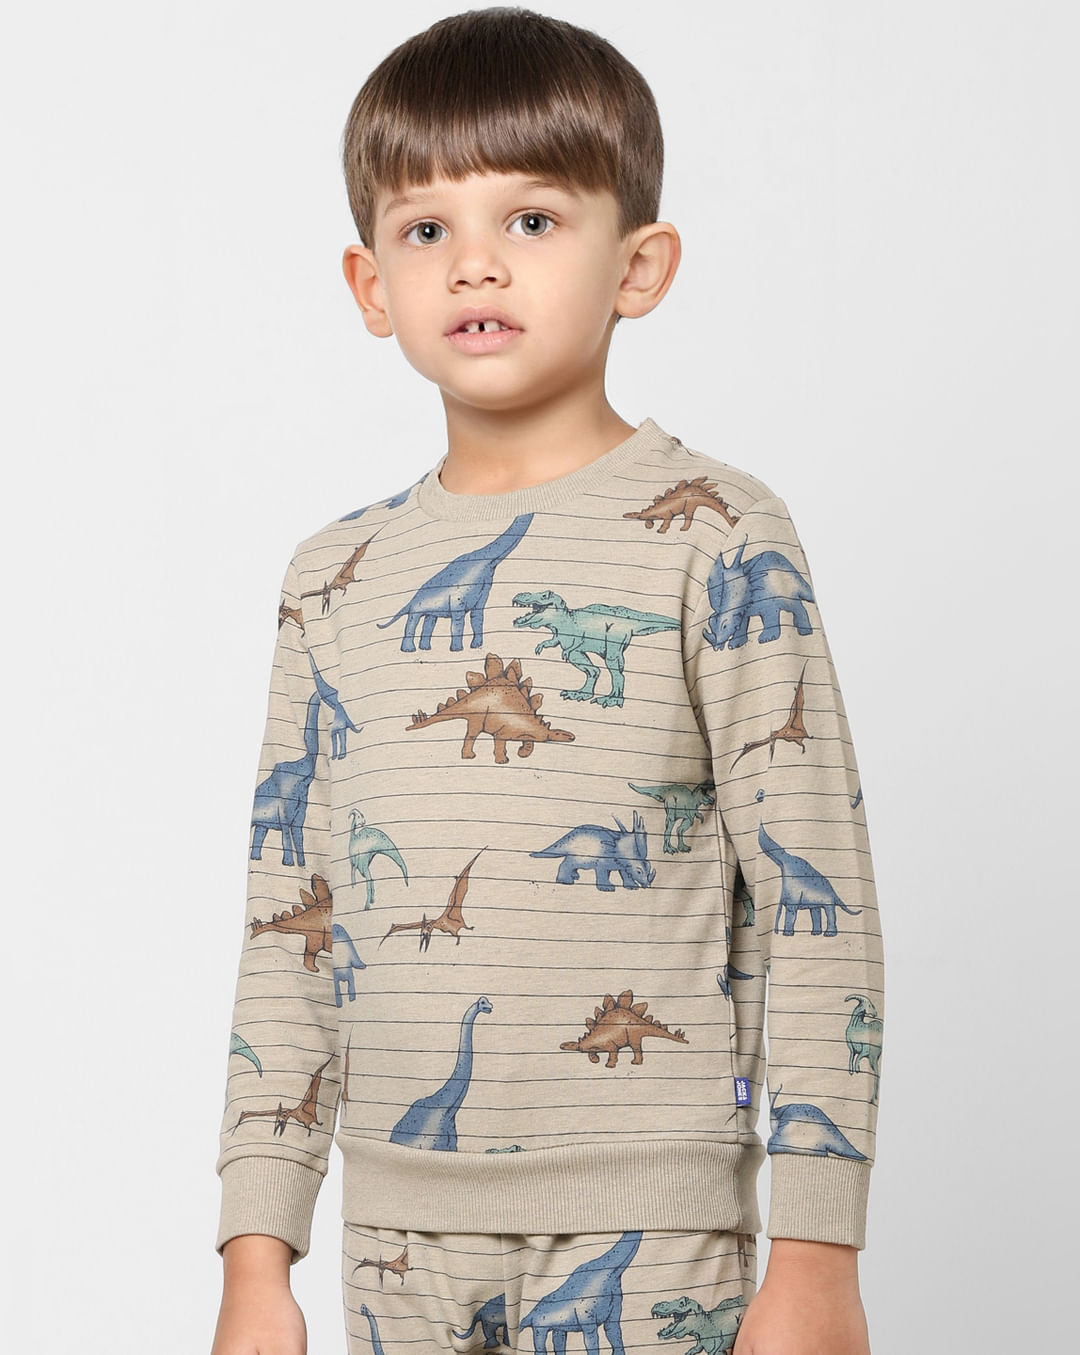 Buy Grey Striped Dinosaur Print Sweatshirt for Boys Online at Jack ...